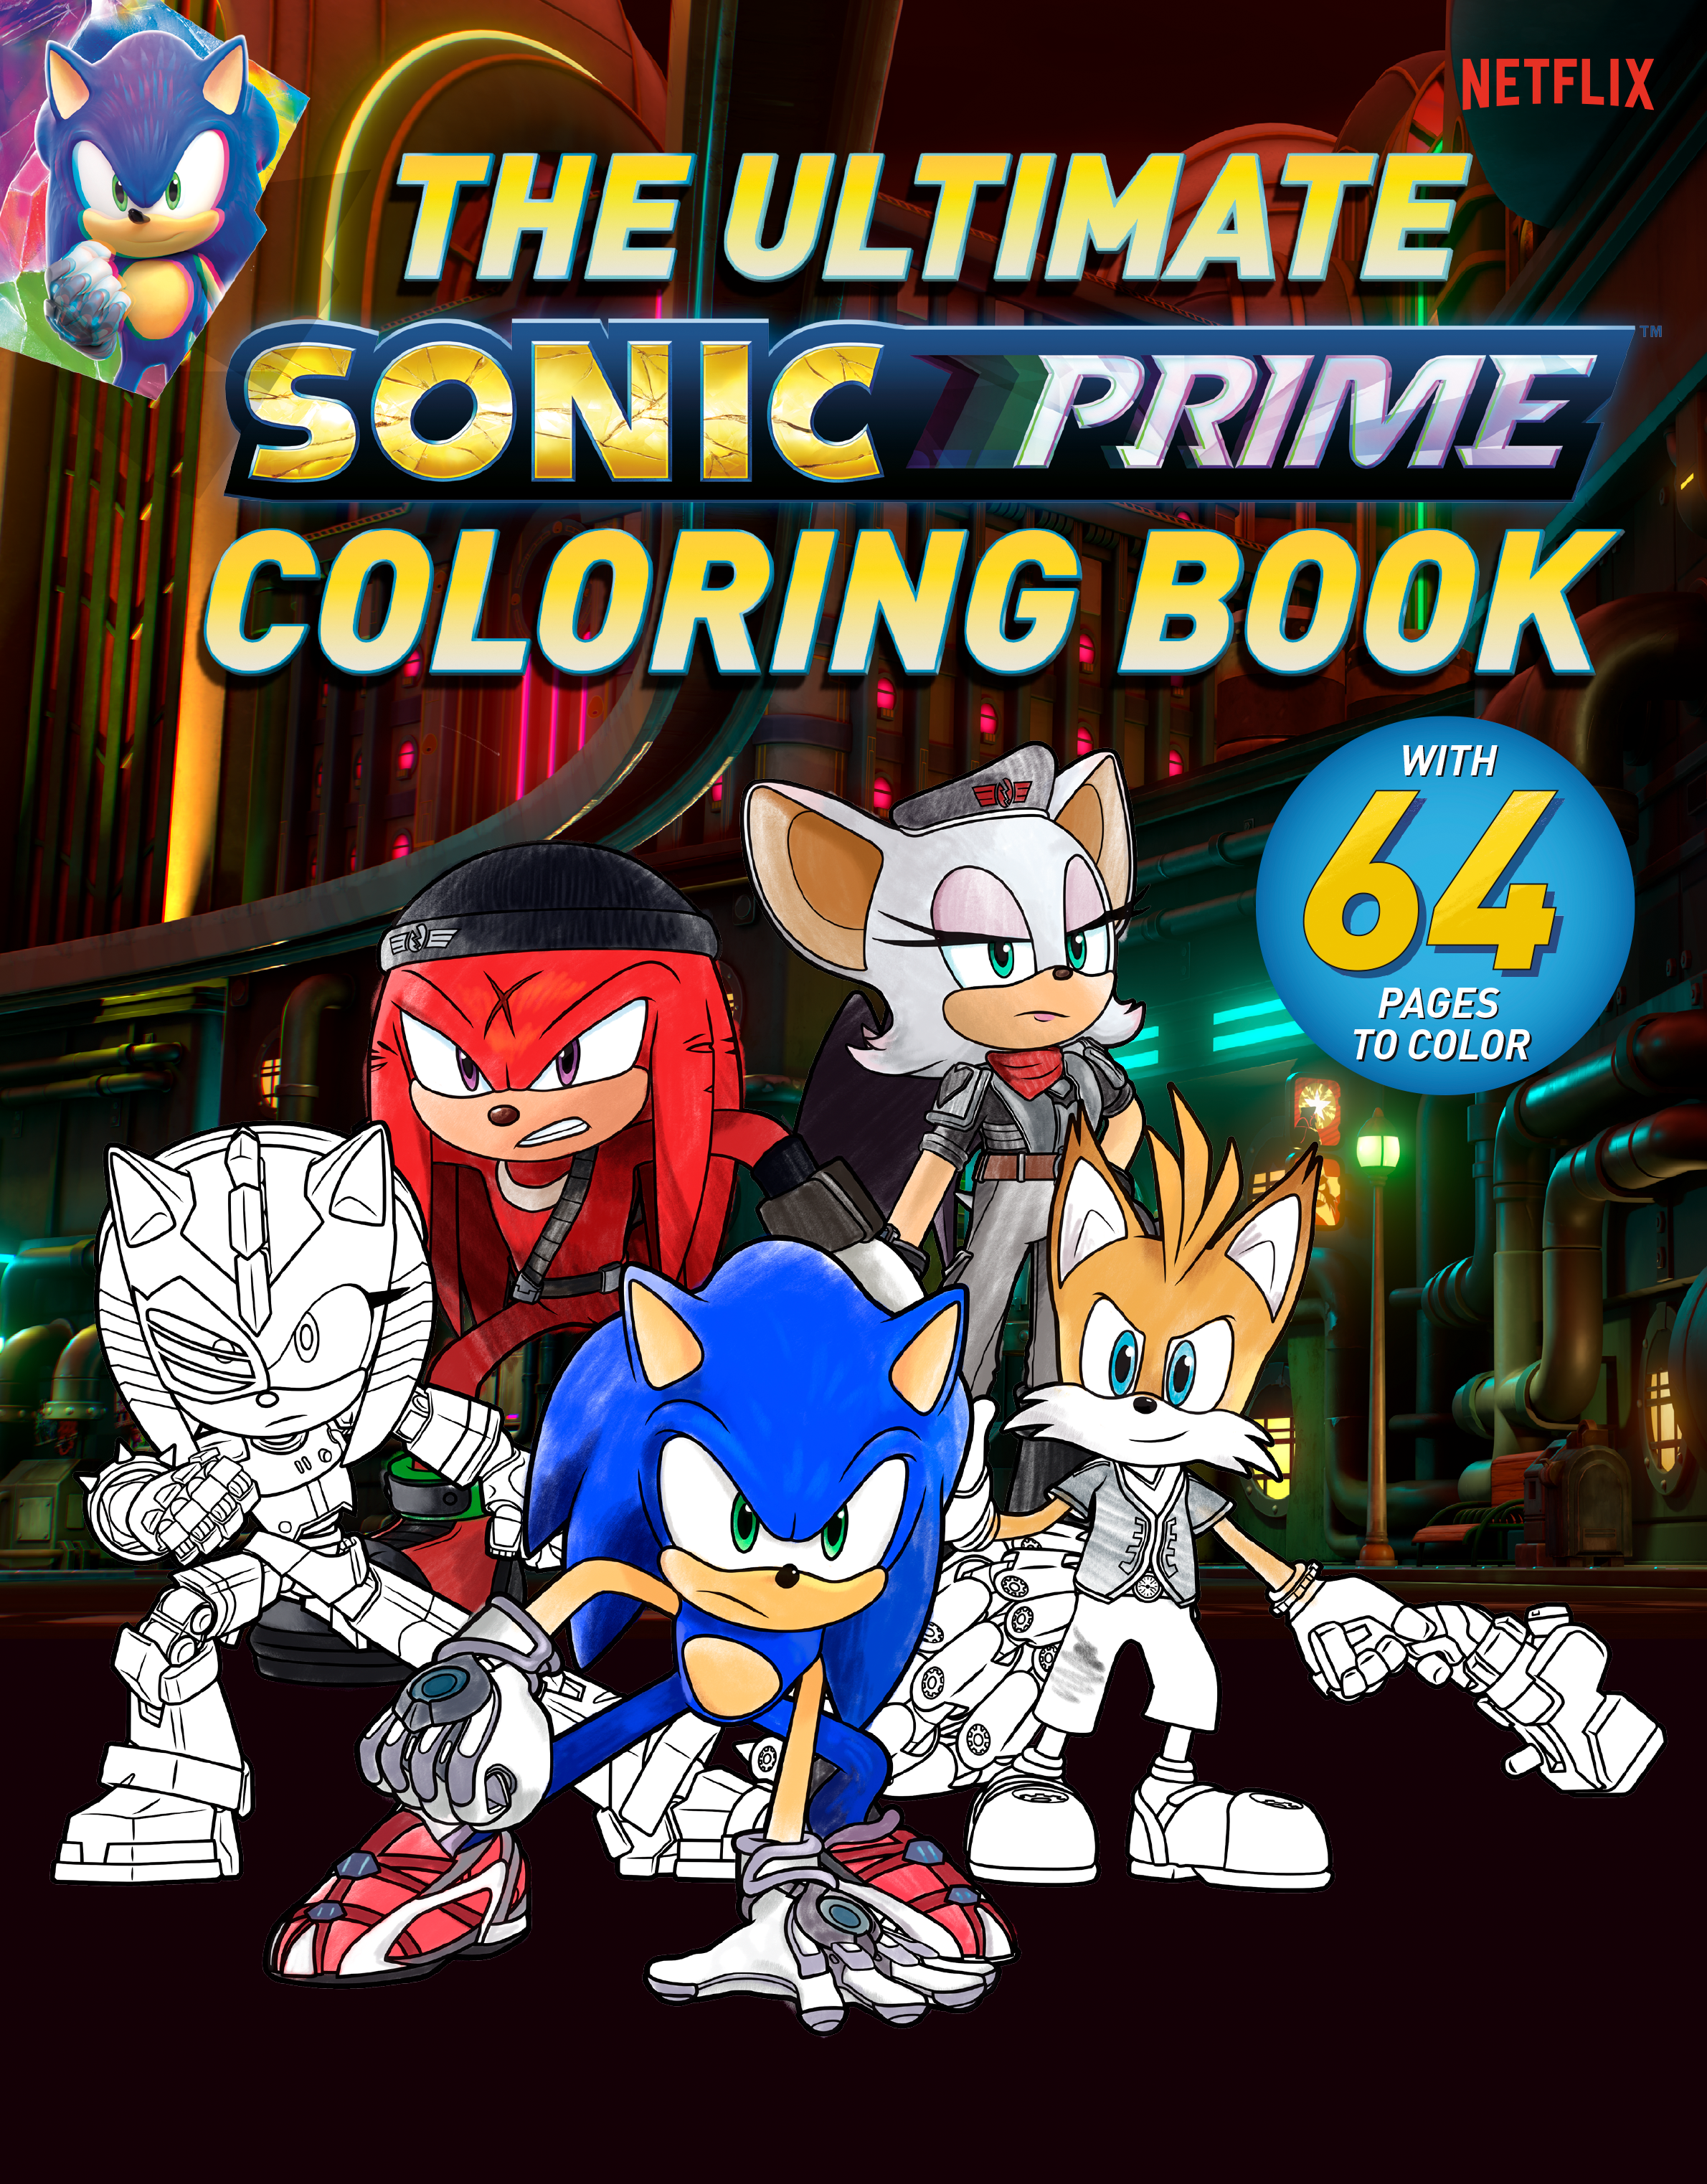 Sonic Colors Shadow The Hedgehog SegaSonic The Hedgehog Sonic The Hedgehog  3 Sonic X PNG - Free Download in 2023